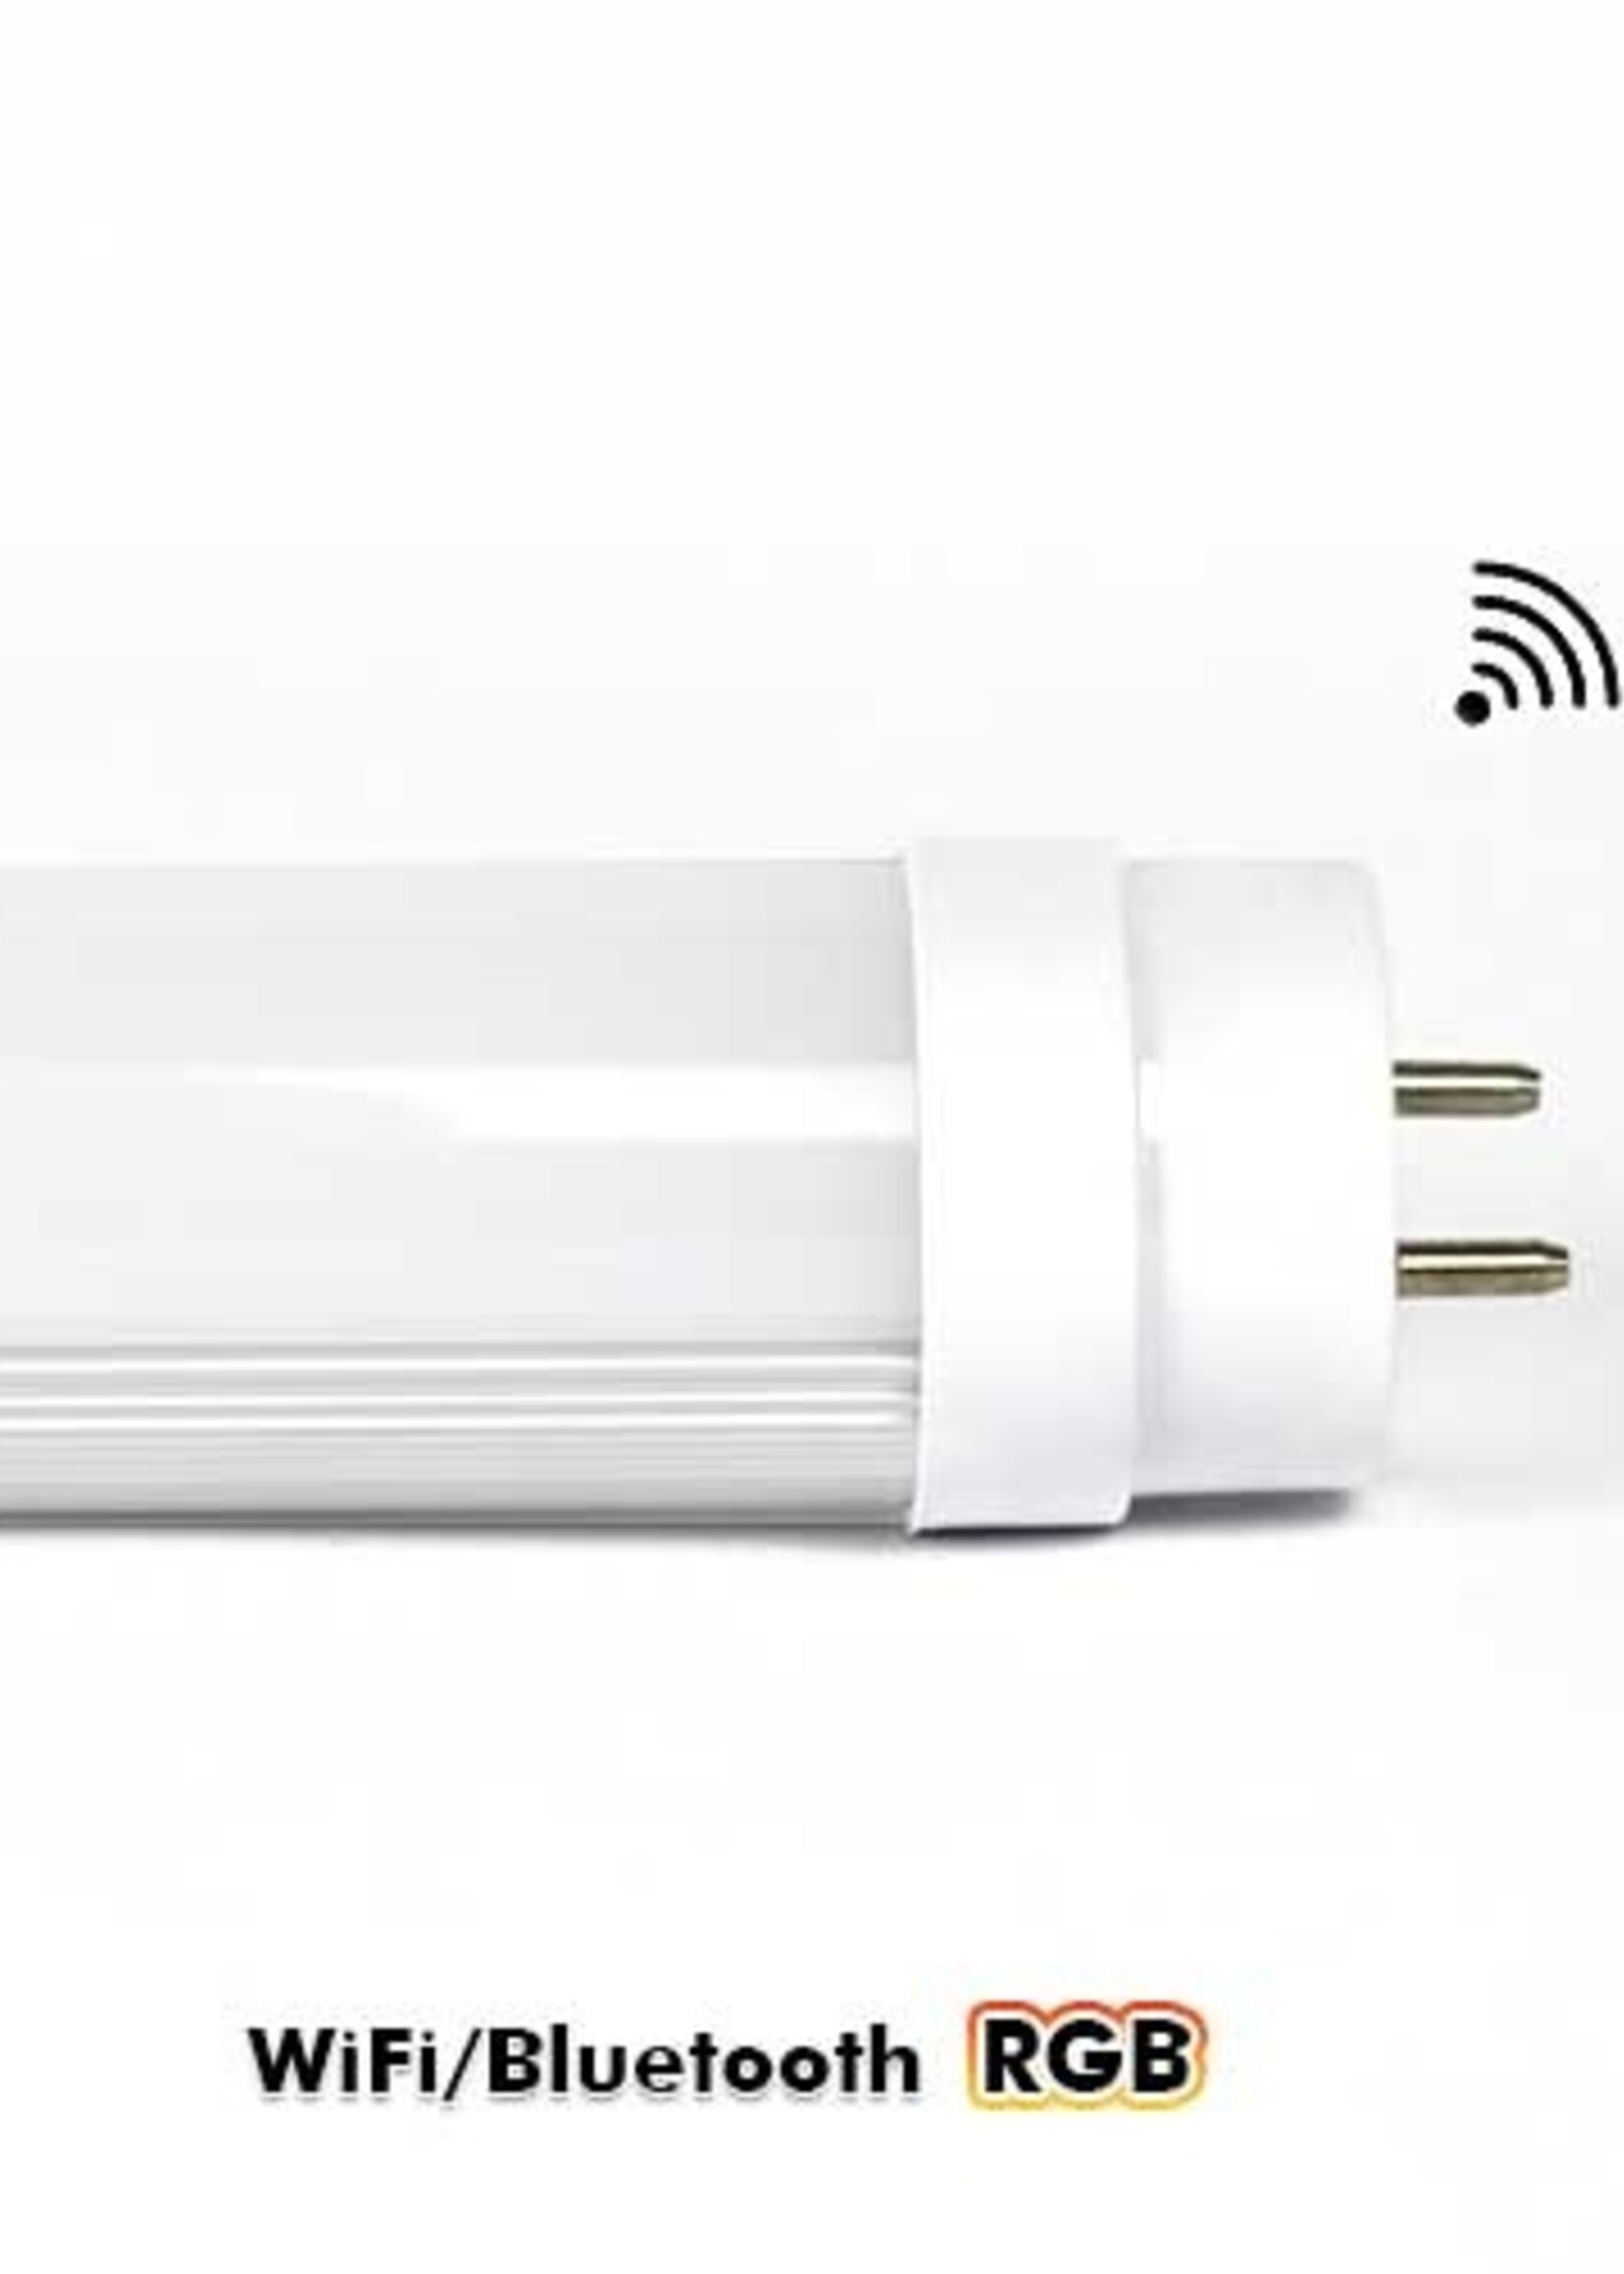 LEDWINKEL-Online Smart WiFi LED Tube Light 120cm RGB Colored Light 18W